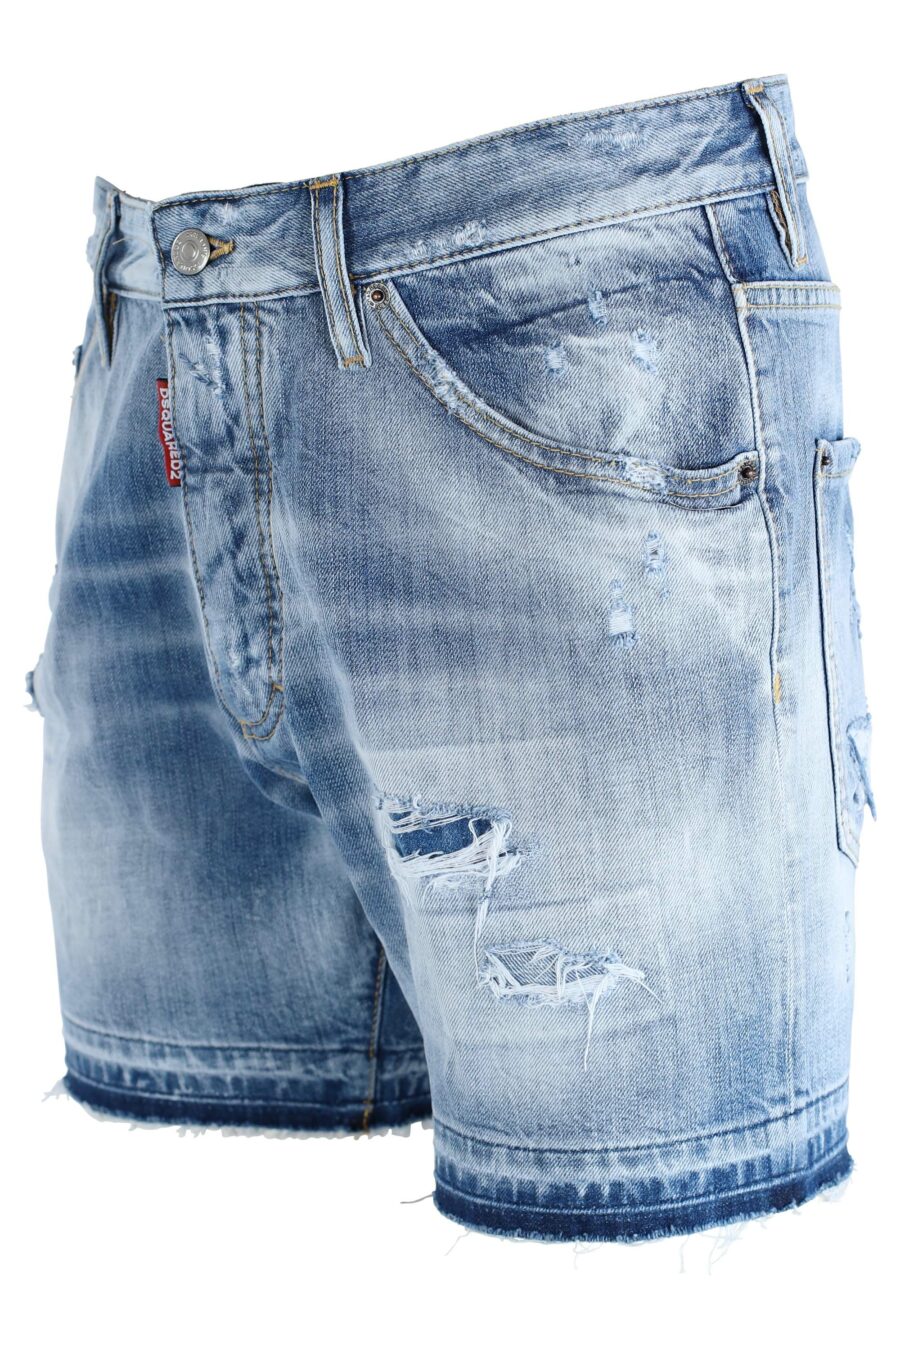 Commando Denim Shorts hellblau getragene Denim Shorts - IMG 1623